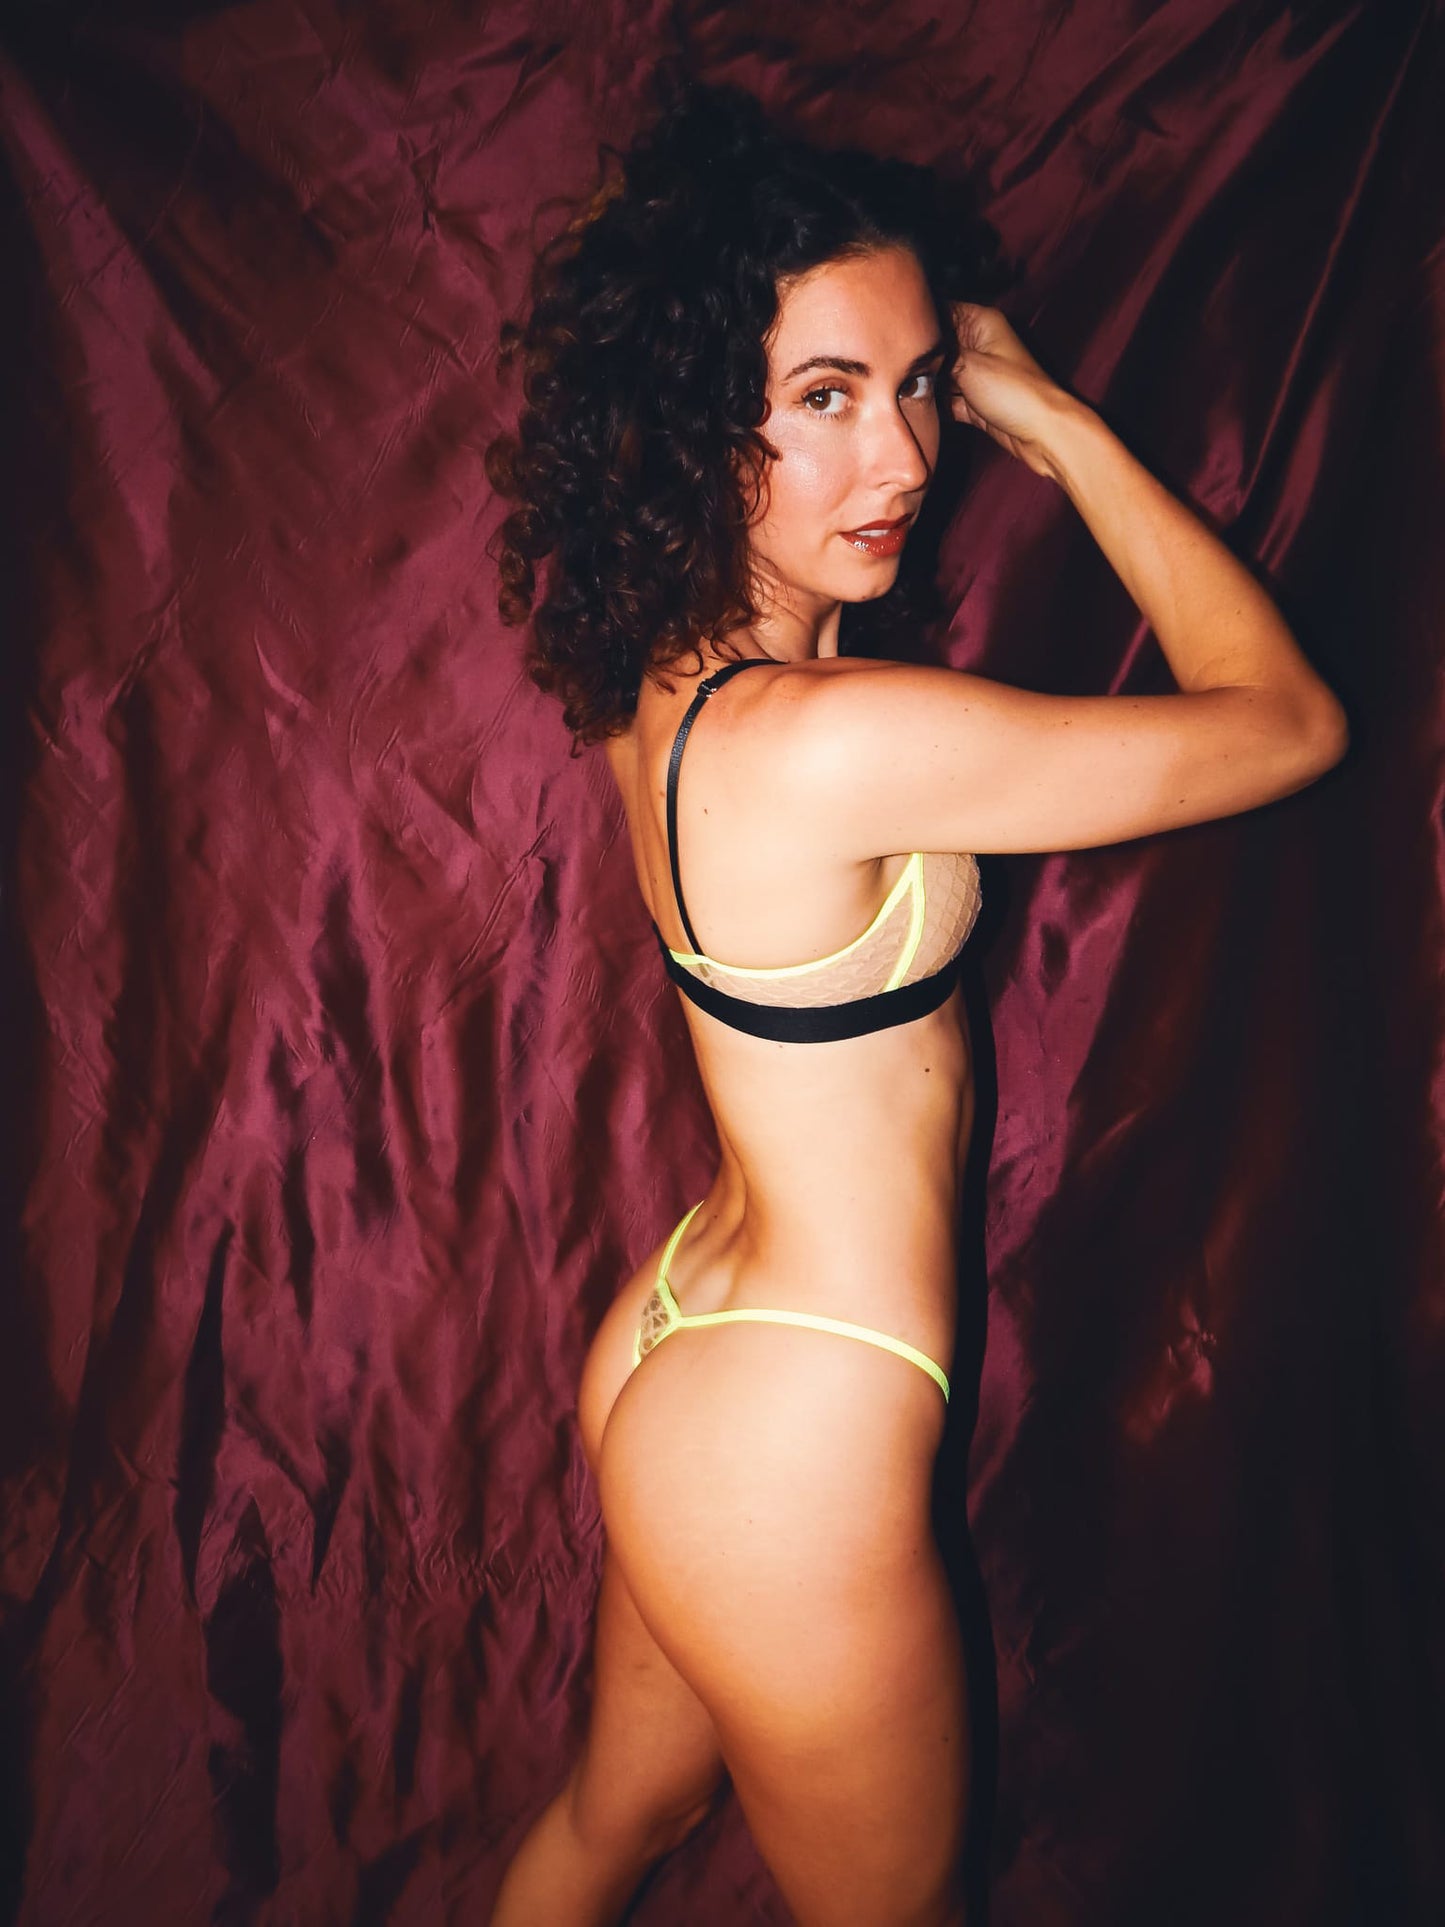 woman posing sideways in nude lingerie set with neon trim